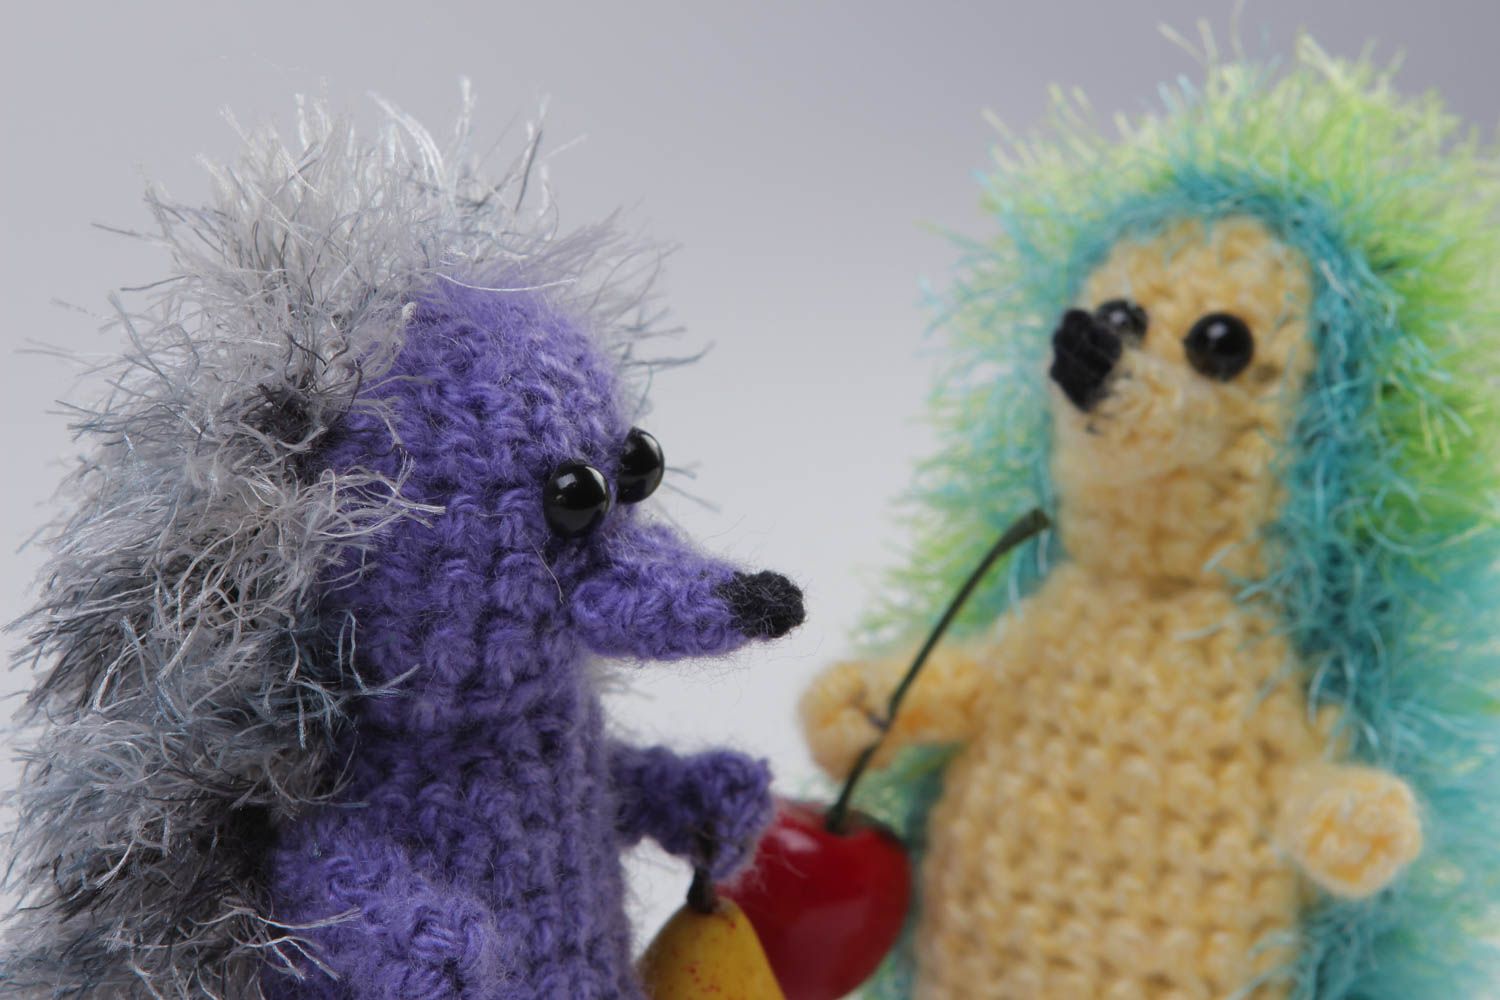 Handmade crocheted toys 2 hedgehogs figurines designer interior toy present photo 5